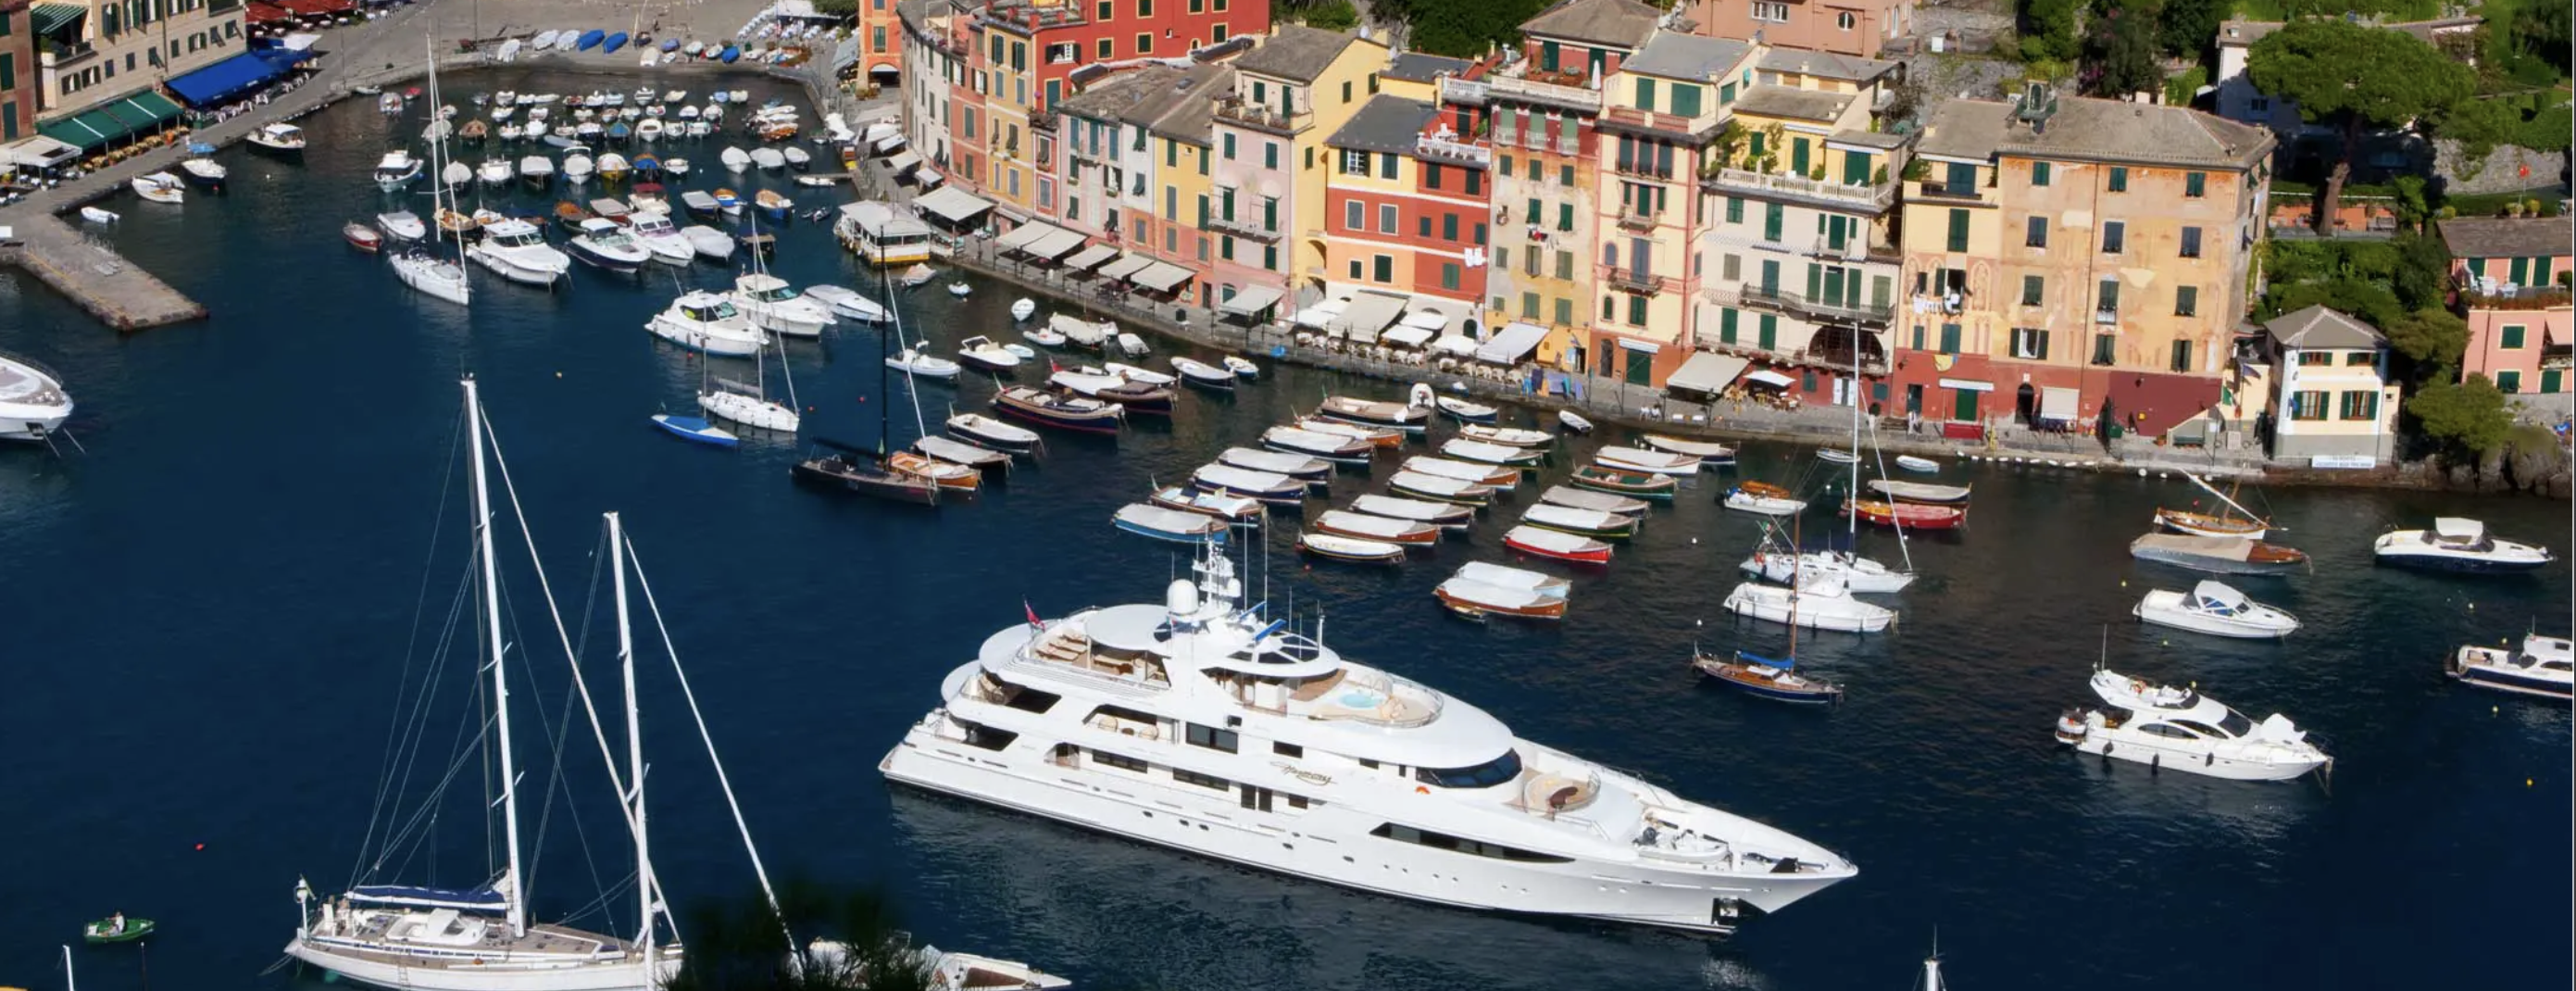 Yacht in Portofino Italy